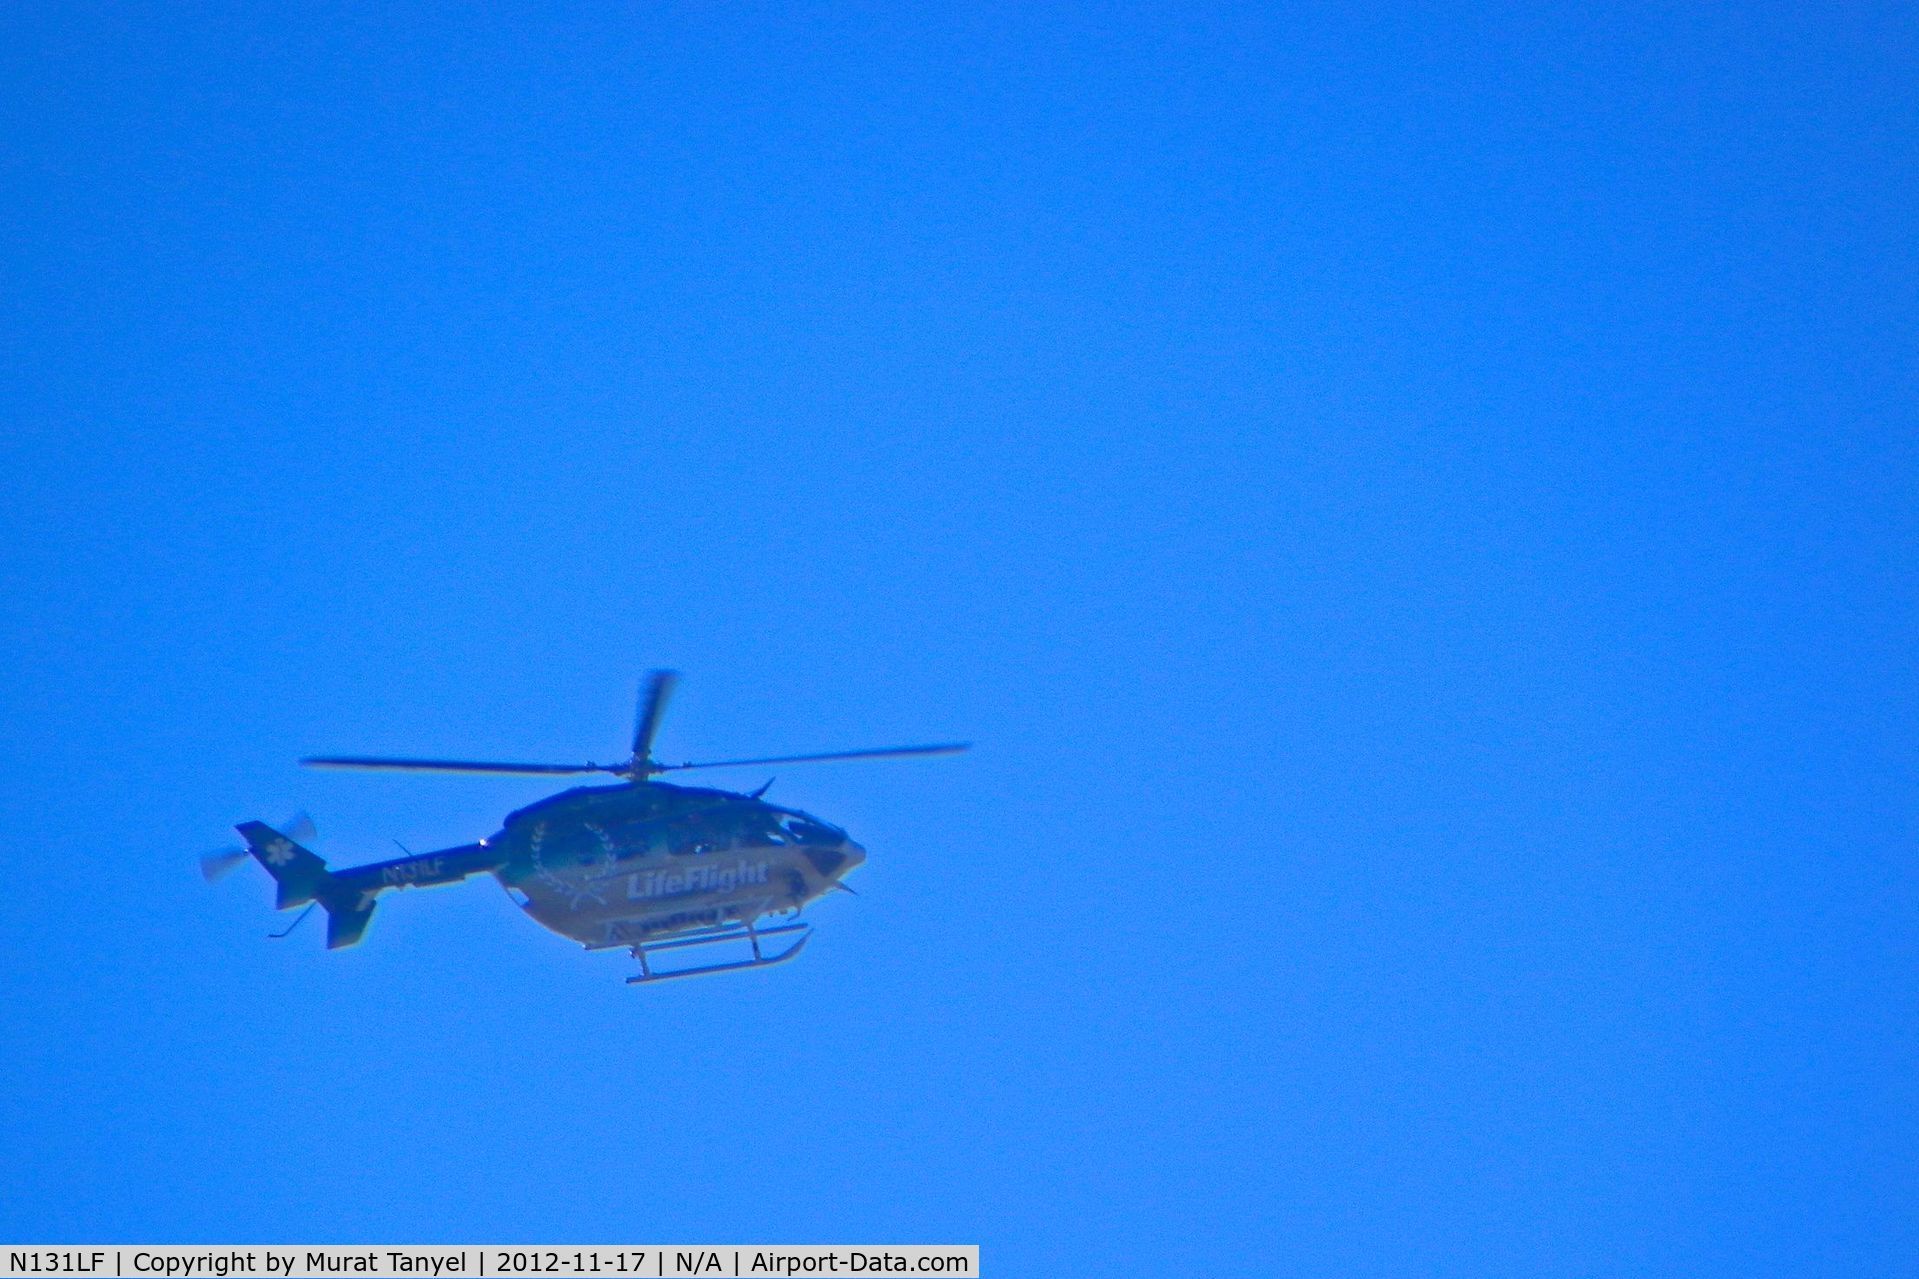 N131LF, 2006 Eurocopter-Kawasaki EC-145 (BK-117C-2) C/N 9096, Flying over the Allegheny River